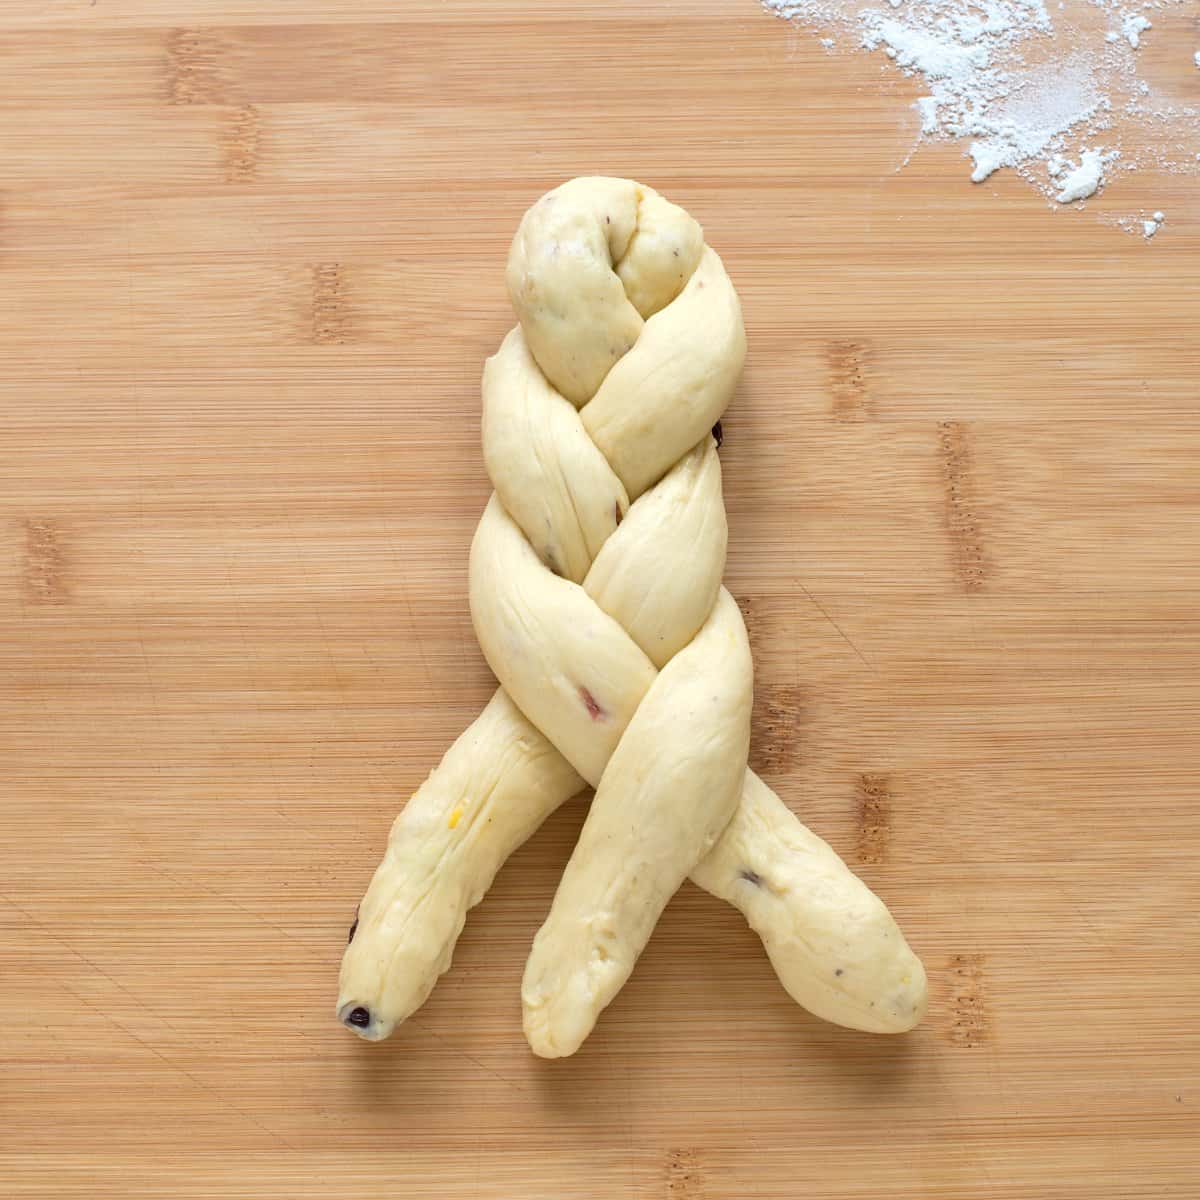 Three braided strands of dough for Czech houska bread.